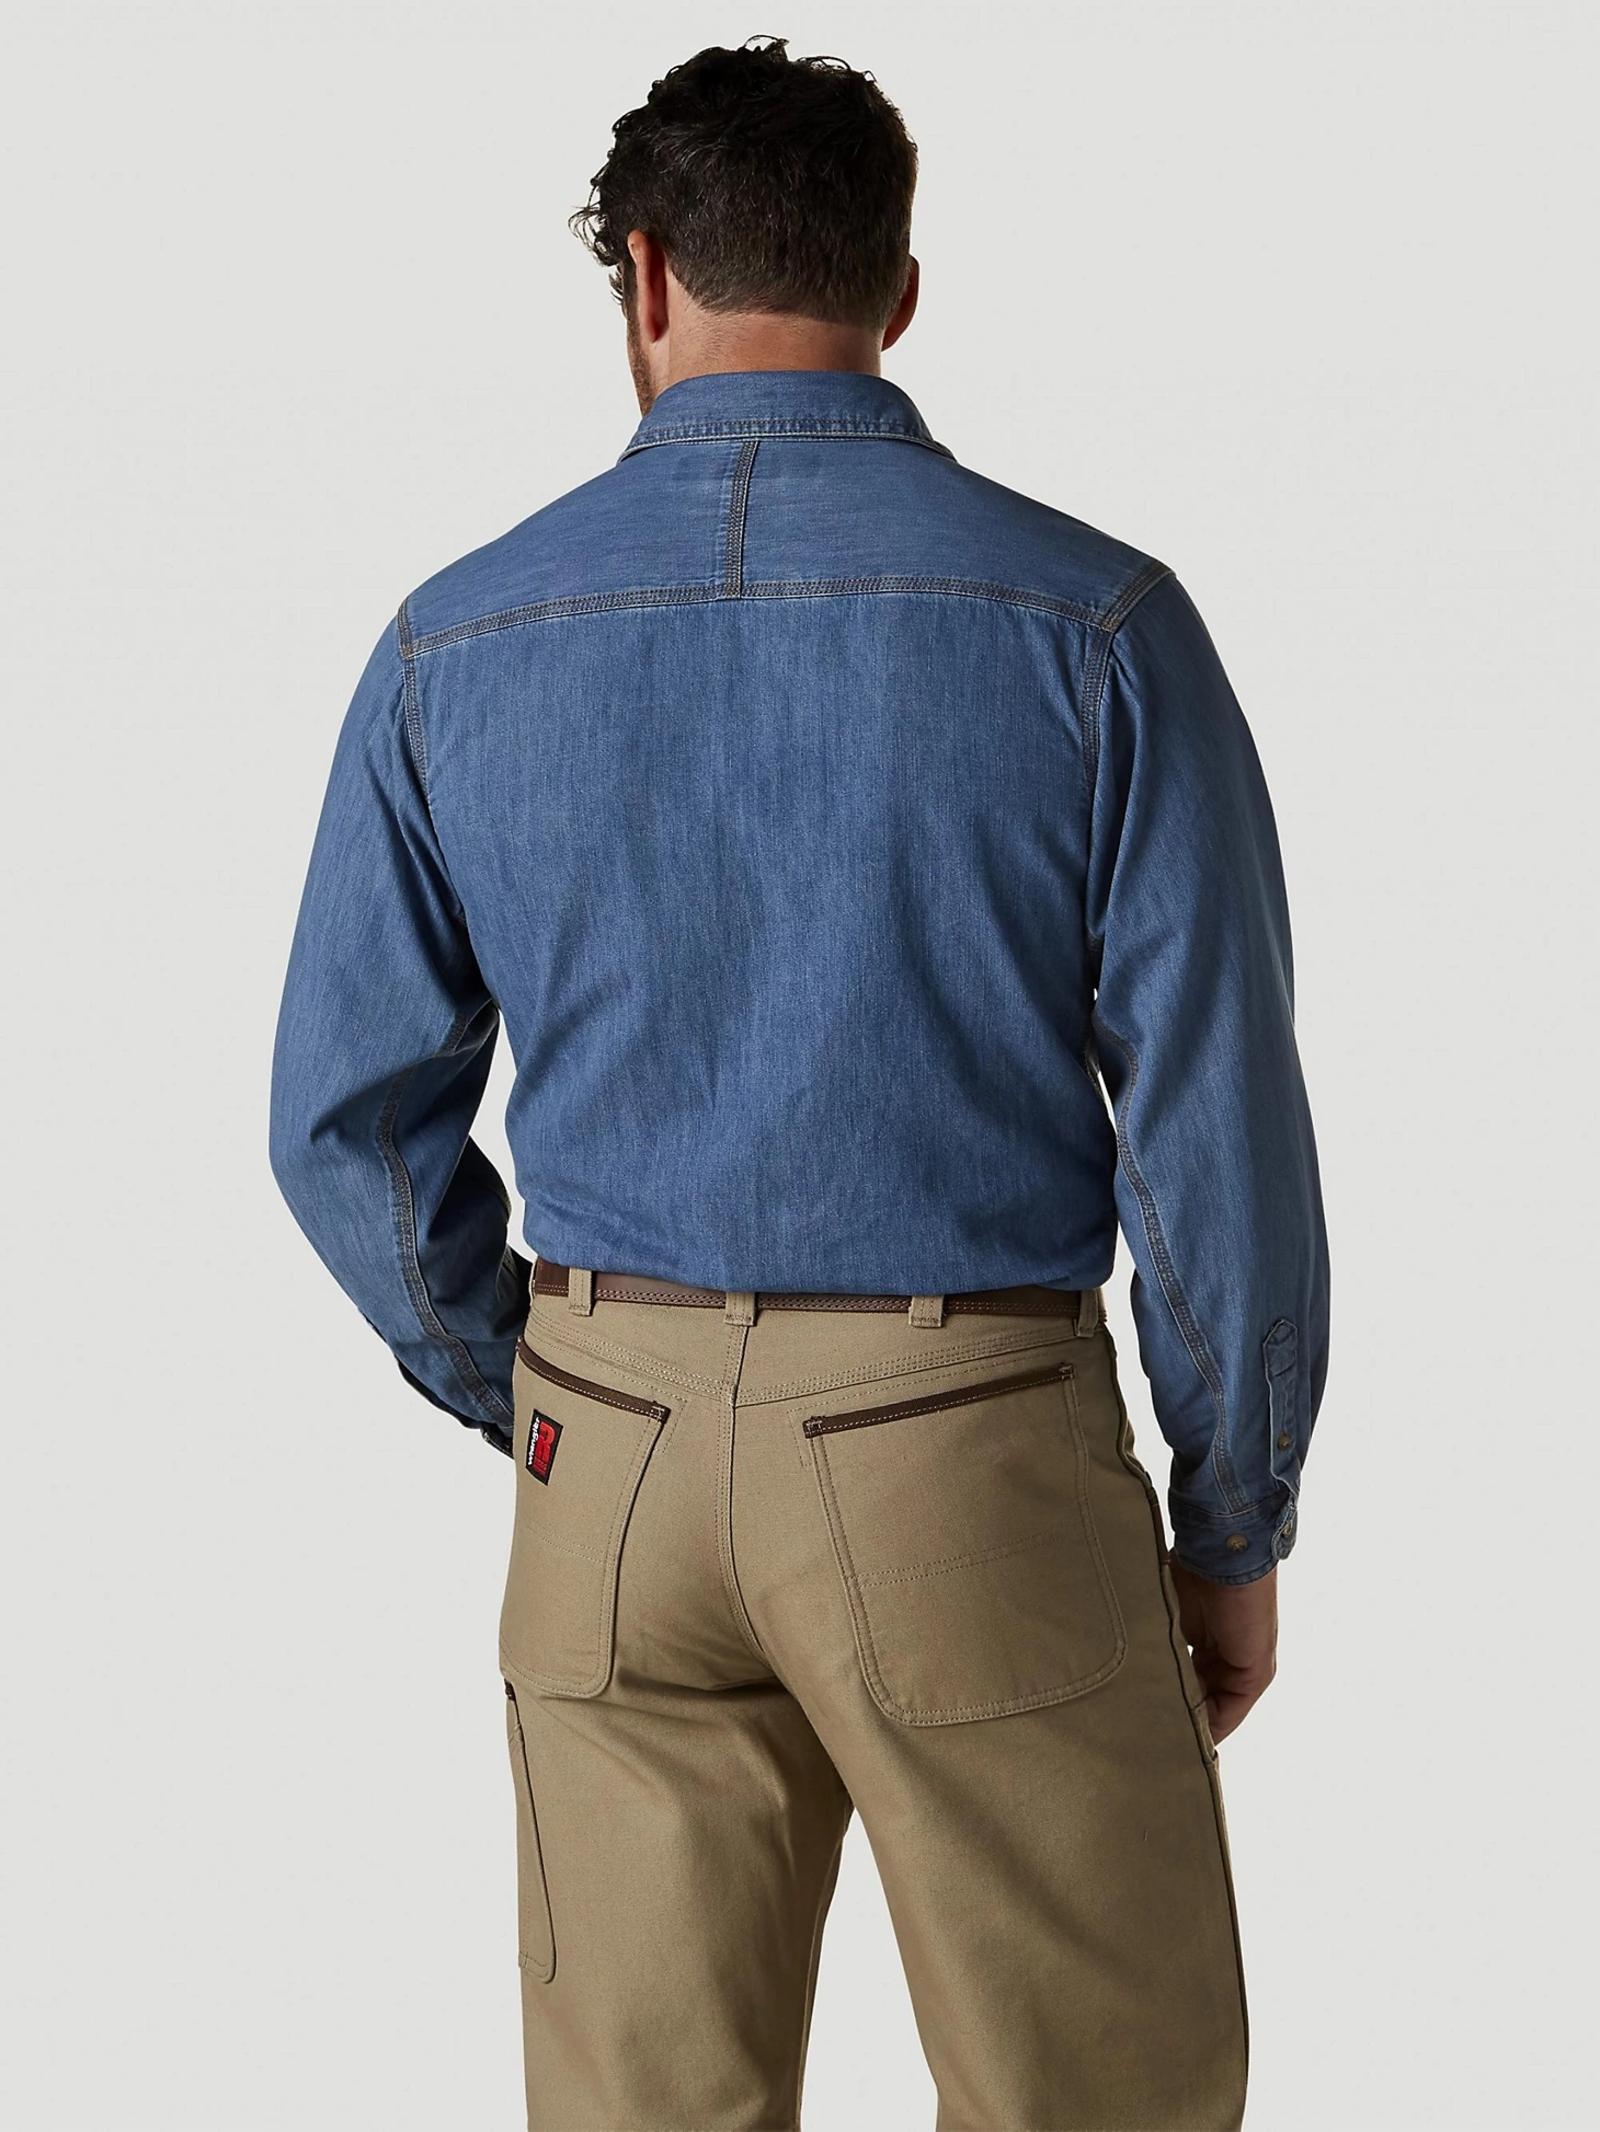 Wrangler® Riggs Workwear® Long Sleeve Button Down Solid Denim Work Shirt